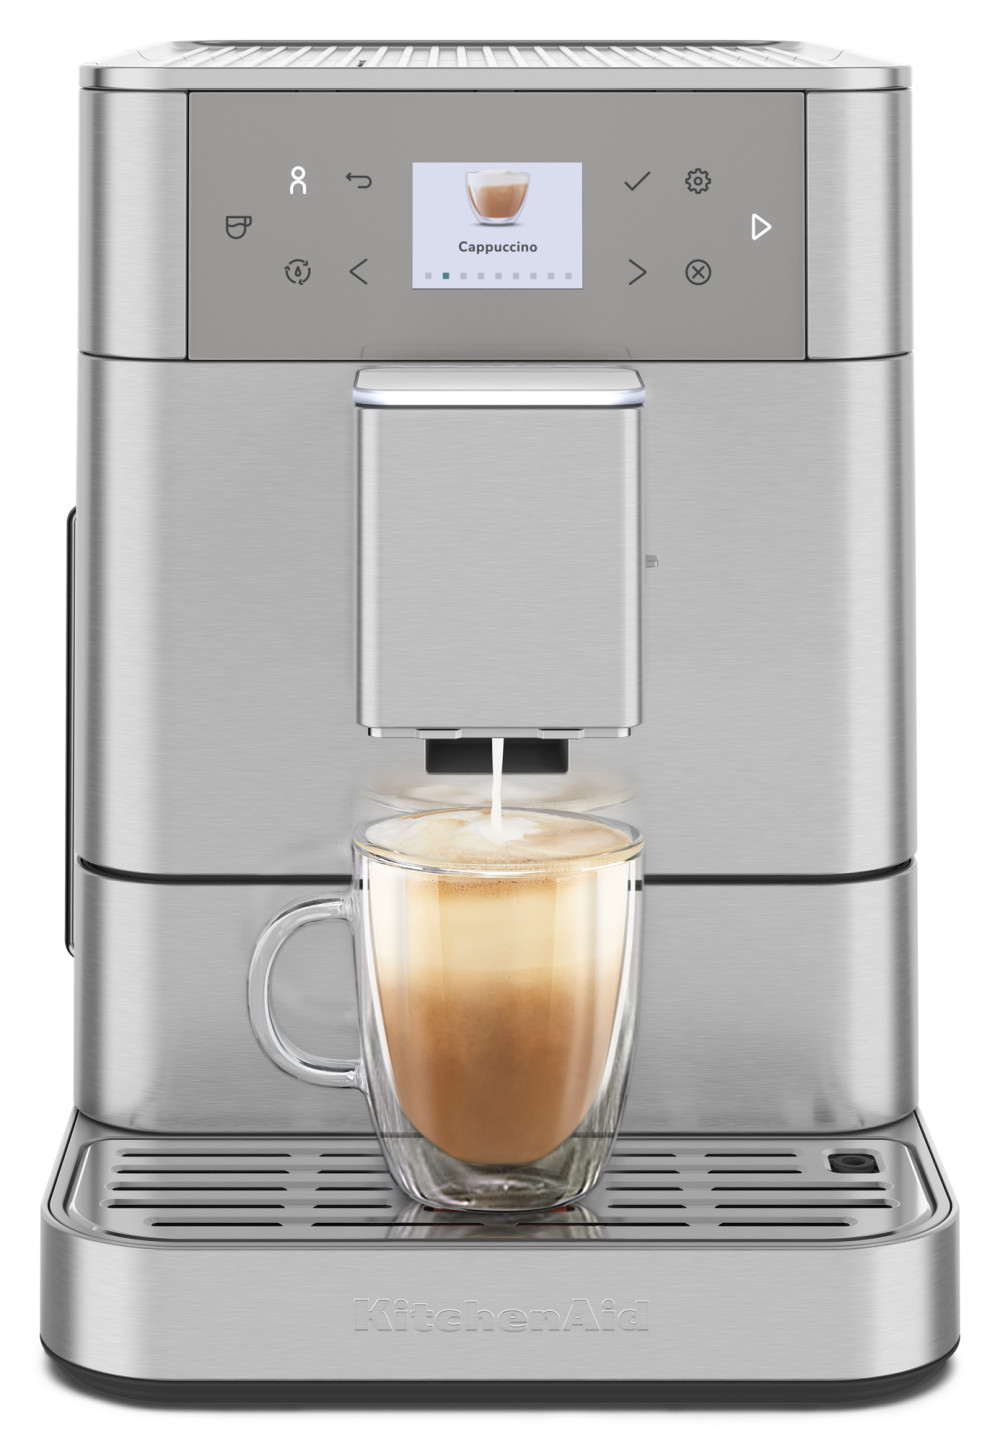 KitchenAid KES8556 Fully Automatic Espresso Machine featured image